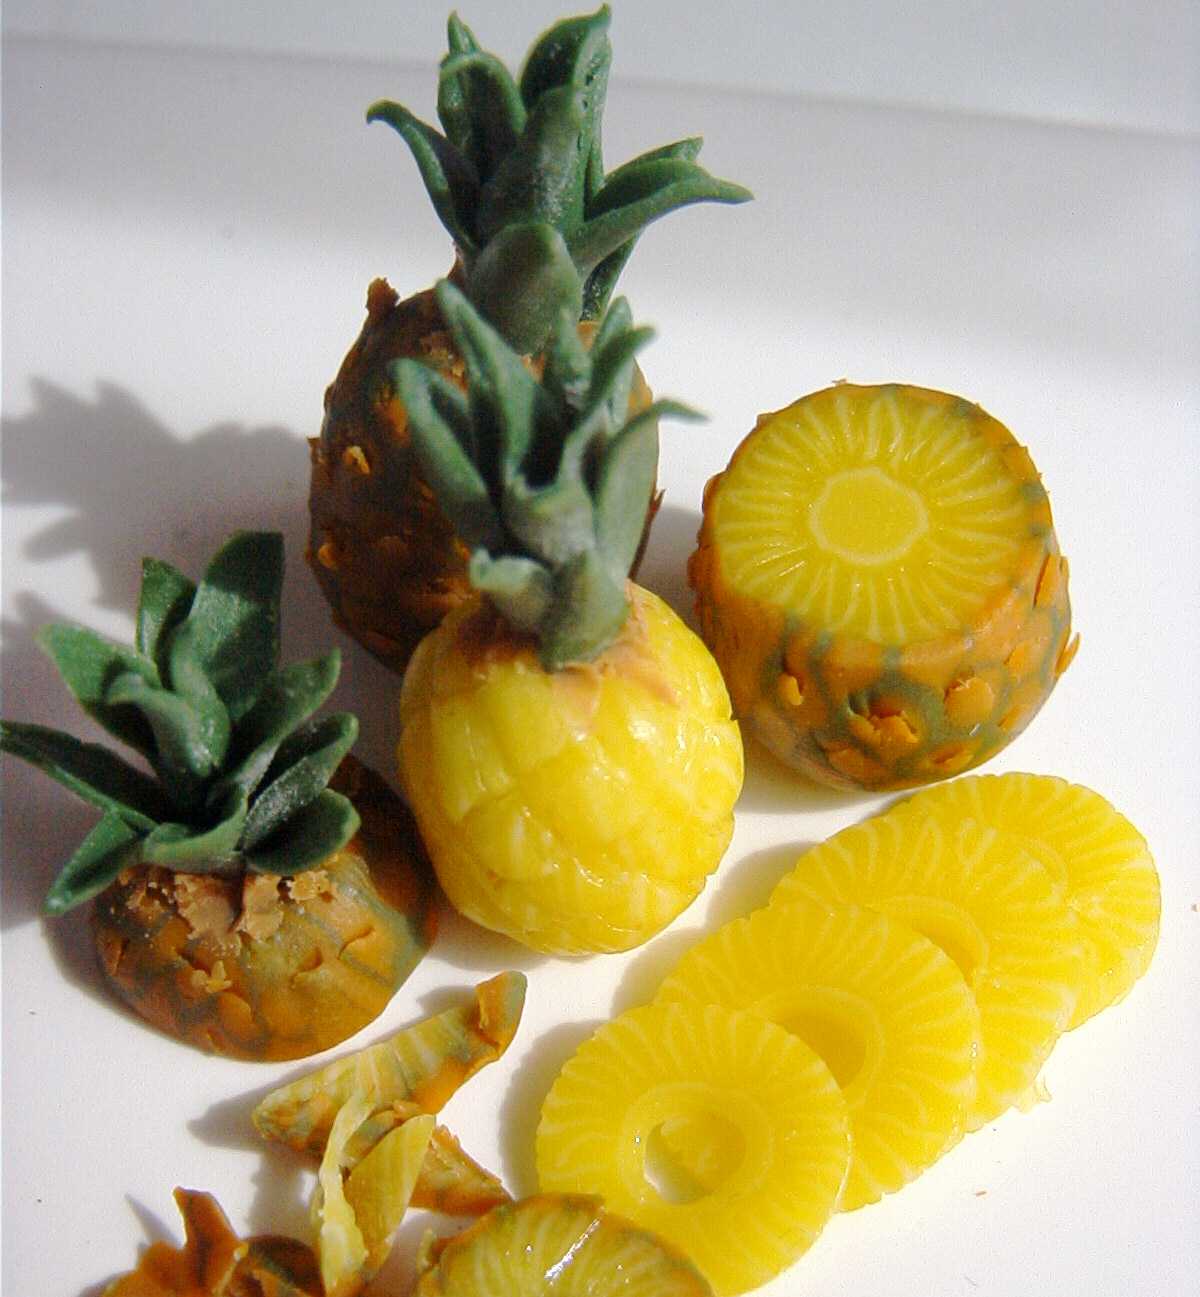 http://kitchen.foraten.net/files/image/pineapple.jpg